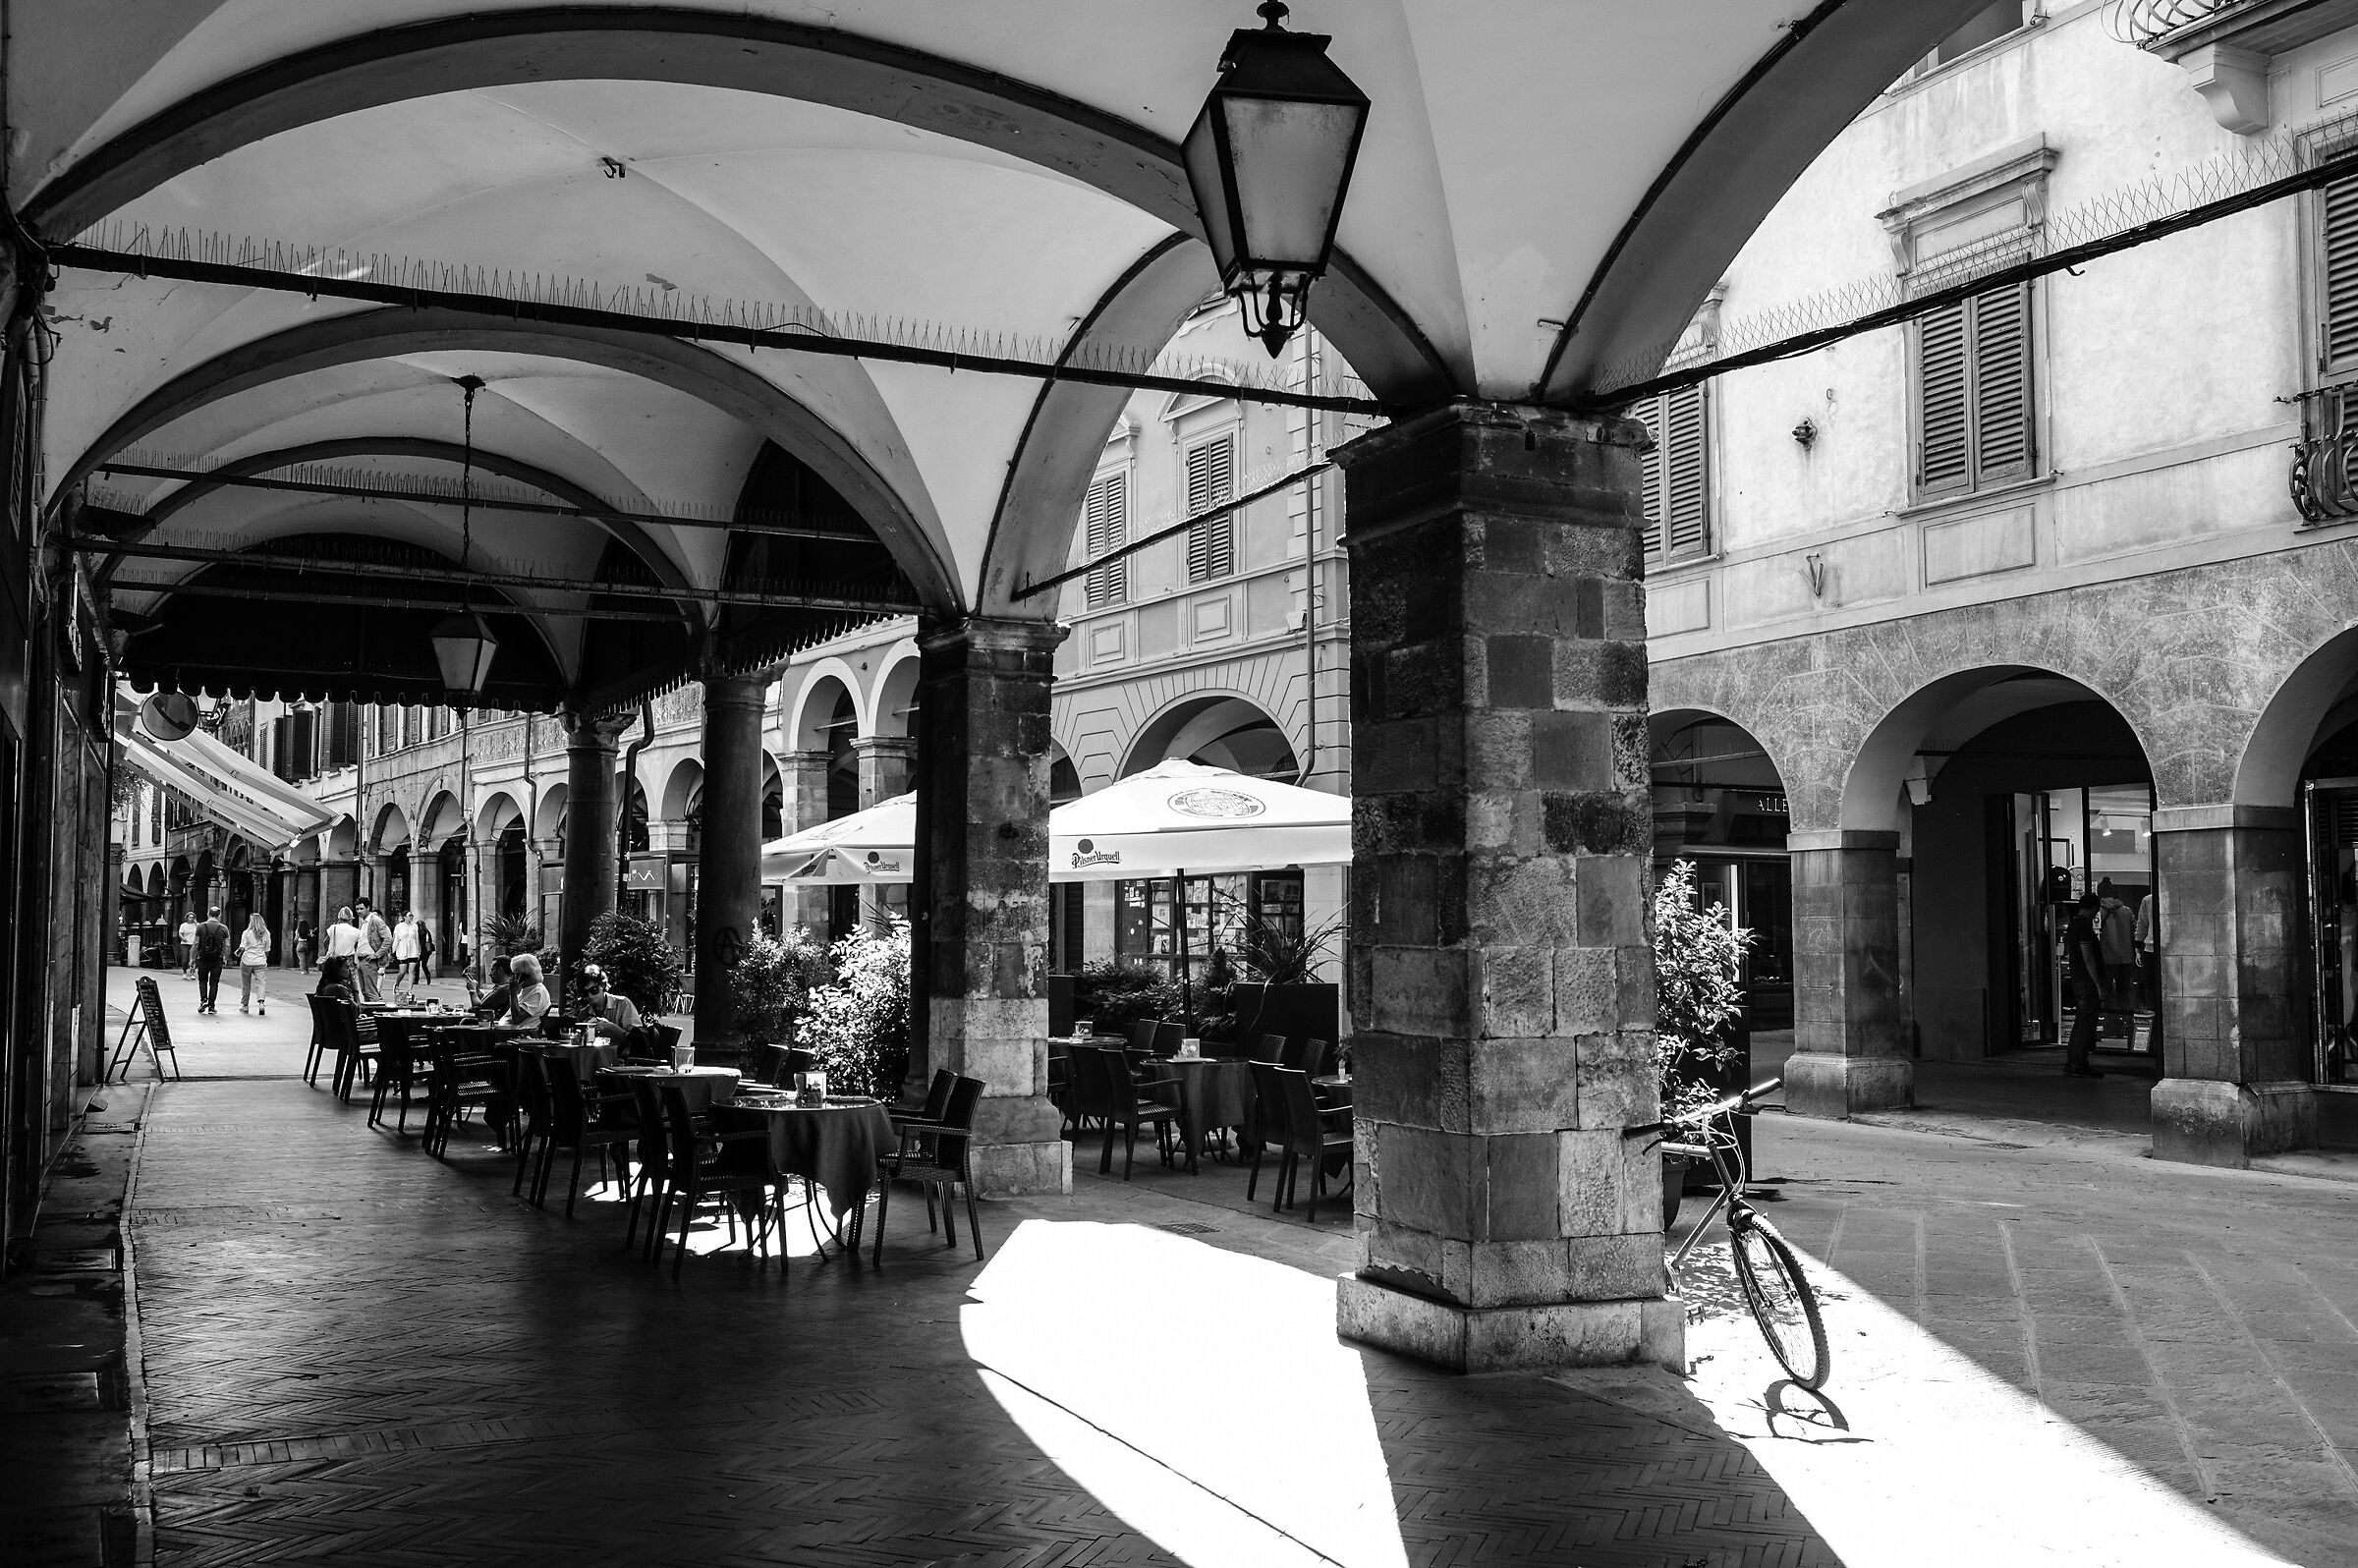 The arcades of Pisa...